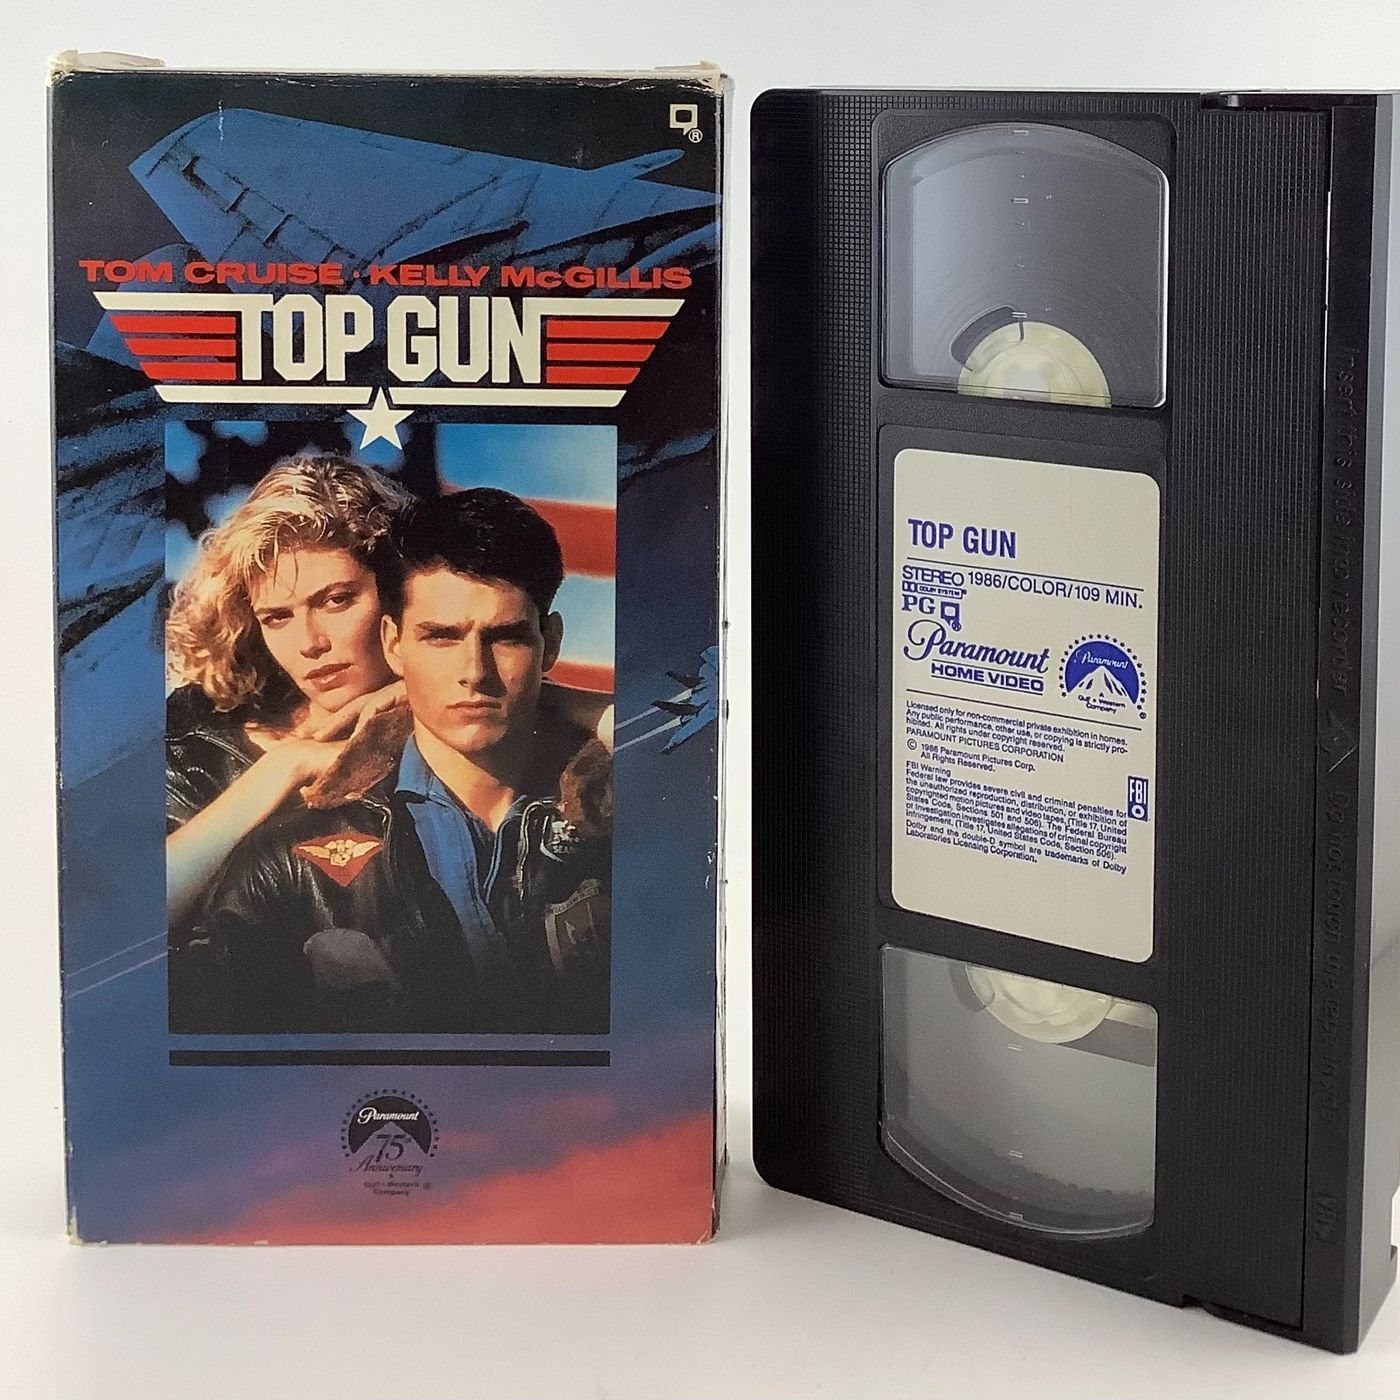 1986 - Top Gun Image